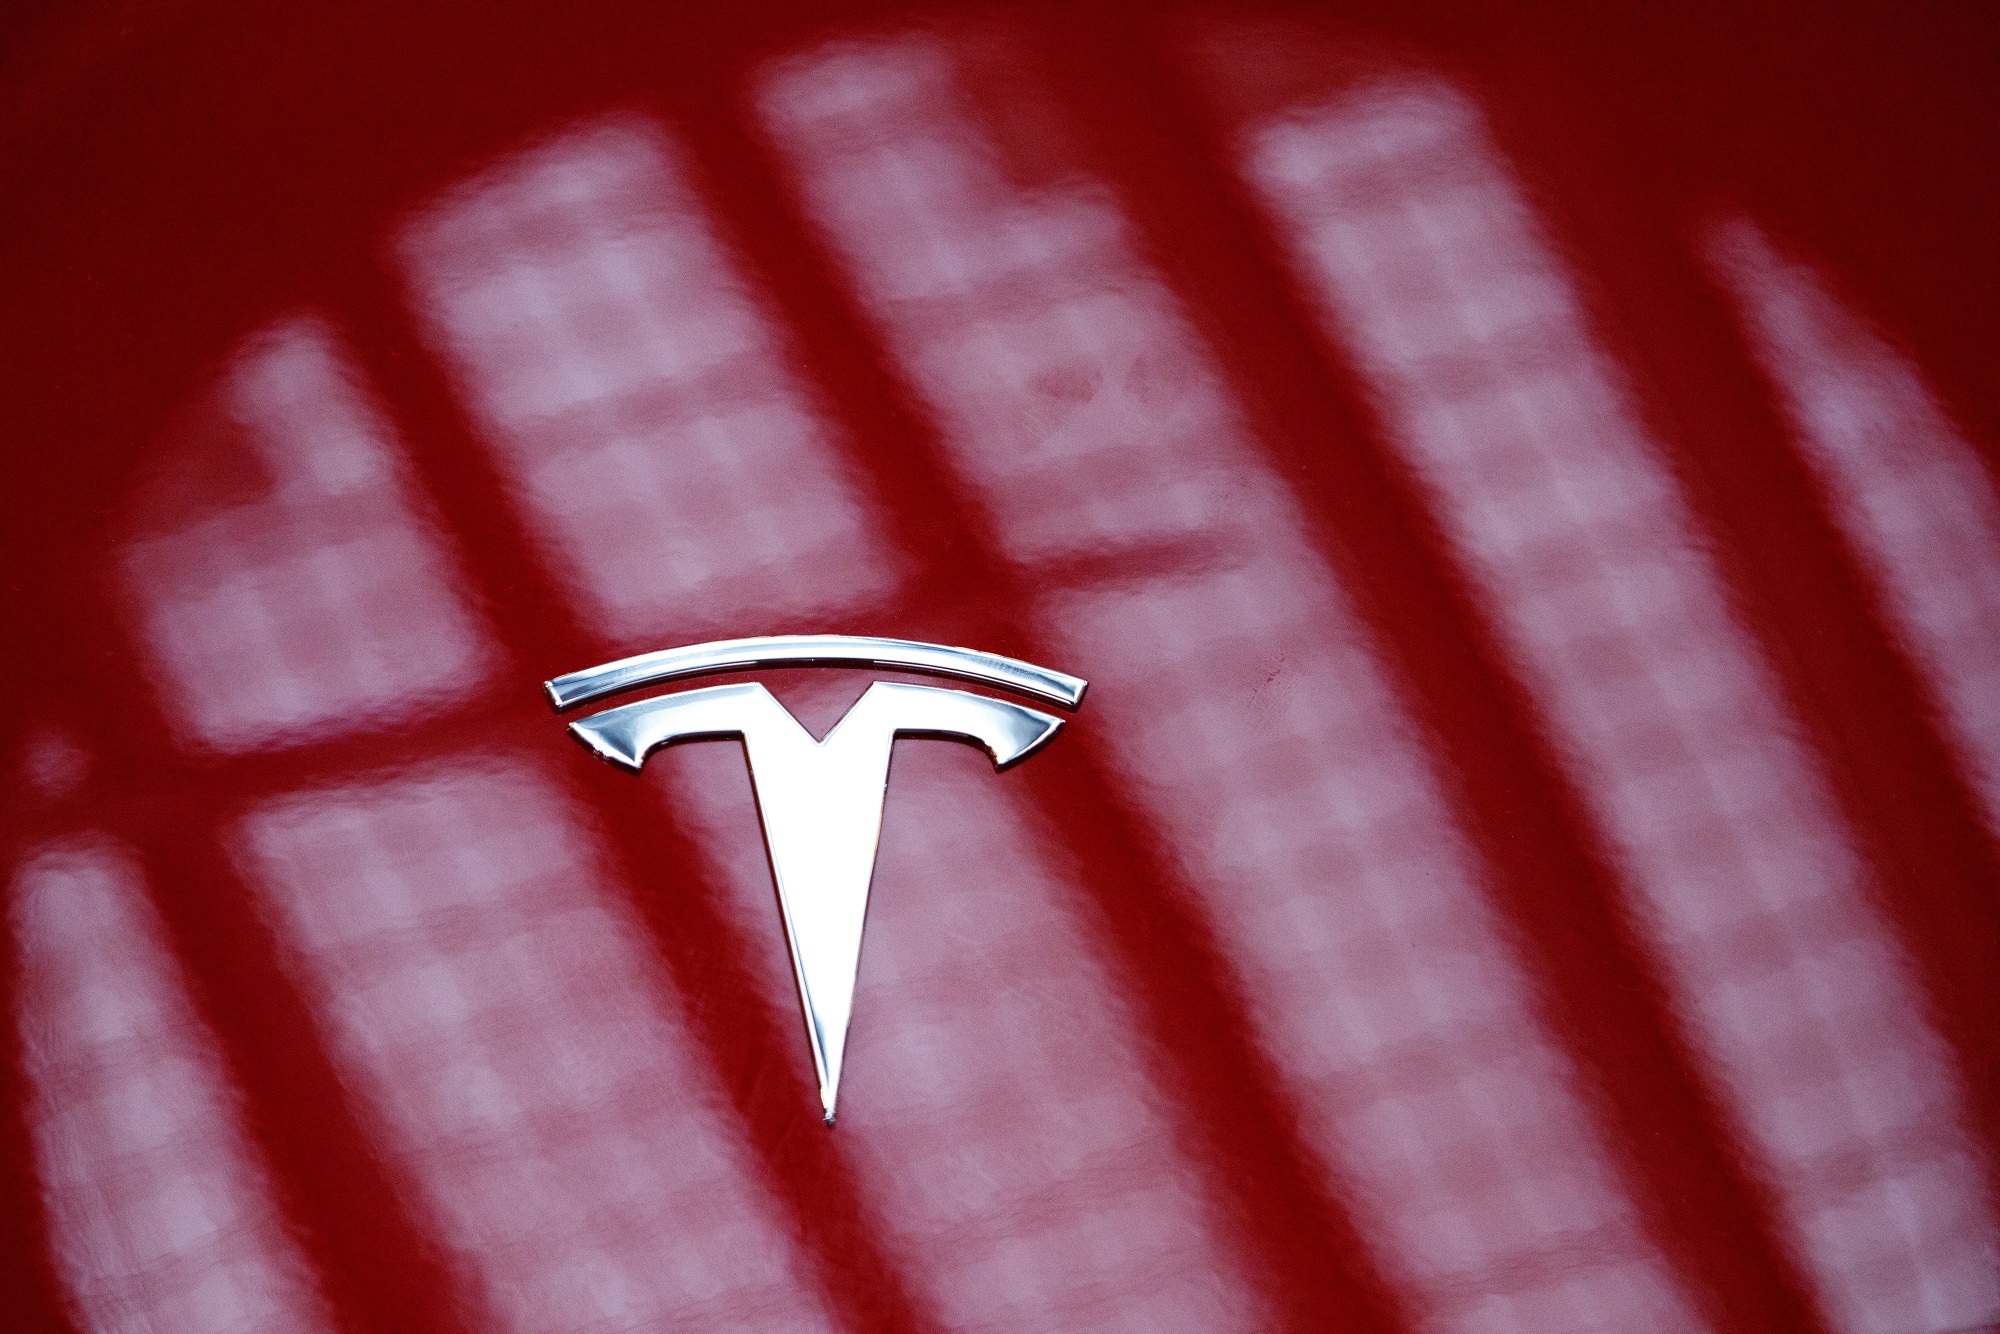 Tesla shares jump after Morgan Stanley predicts Dojo supercomputer could  add $500 billion in market value